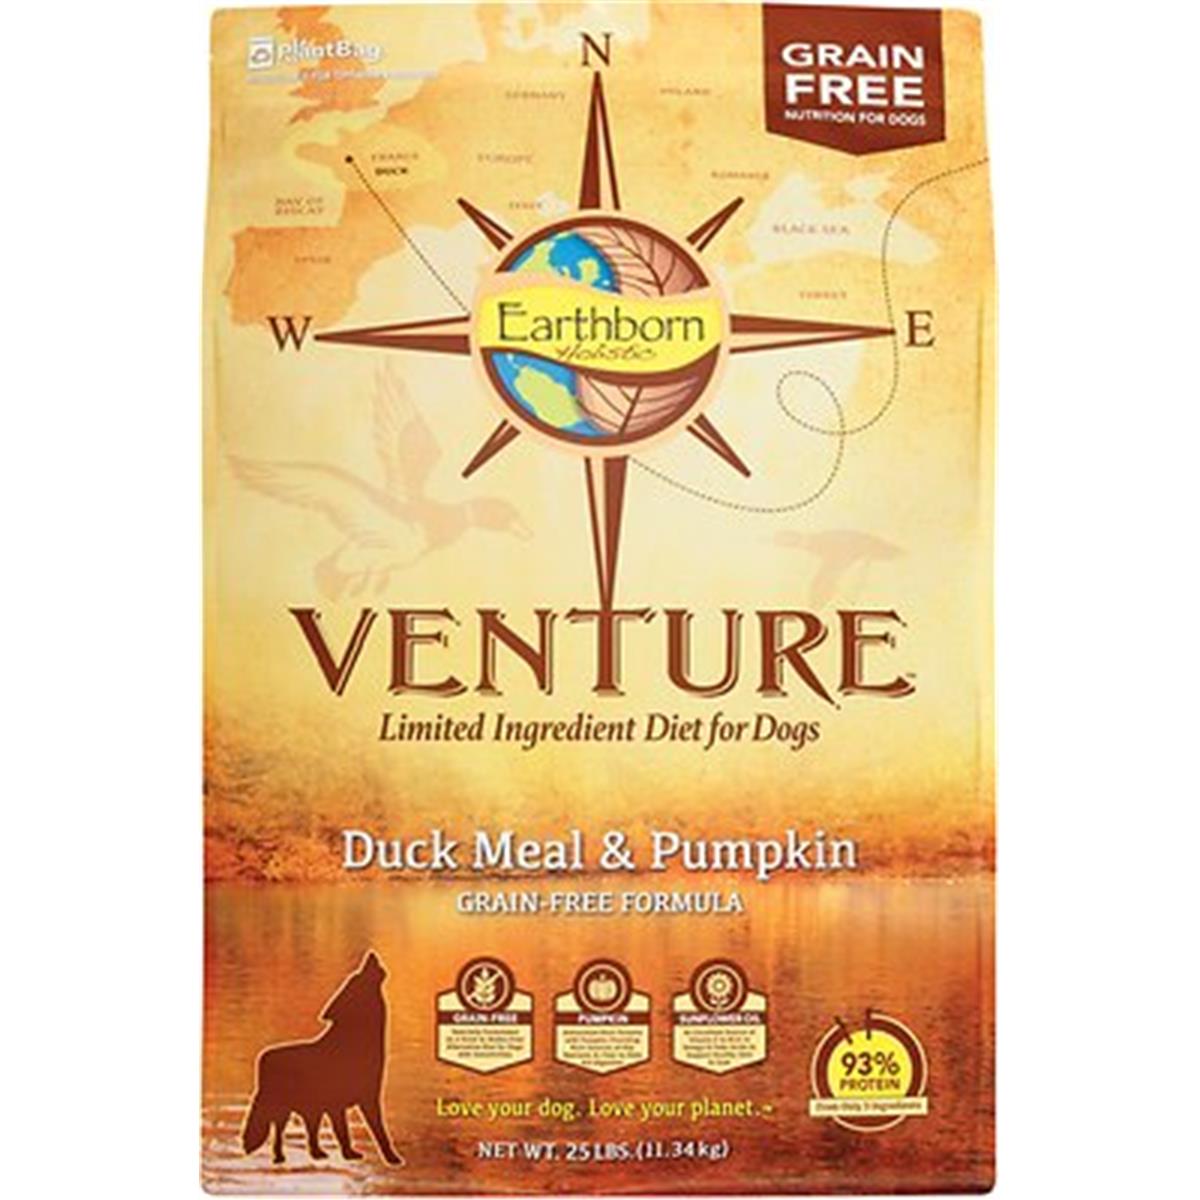 Pf57010 Venture Duck Meal & Pumpkin Grain-free Dry Dog Food - 25 Lbs